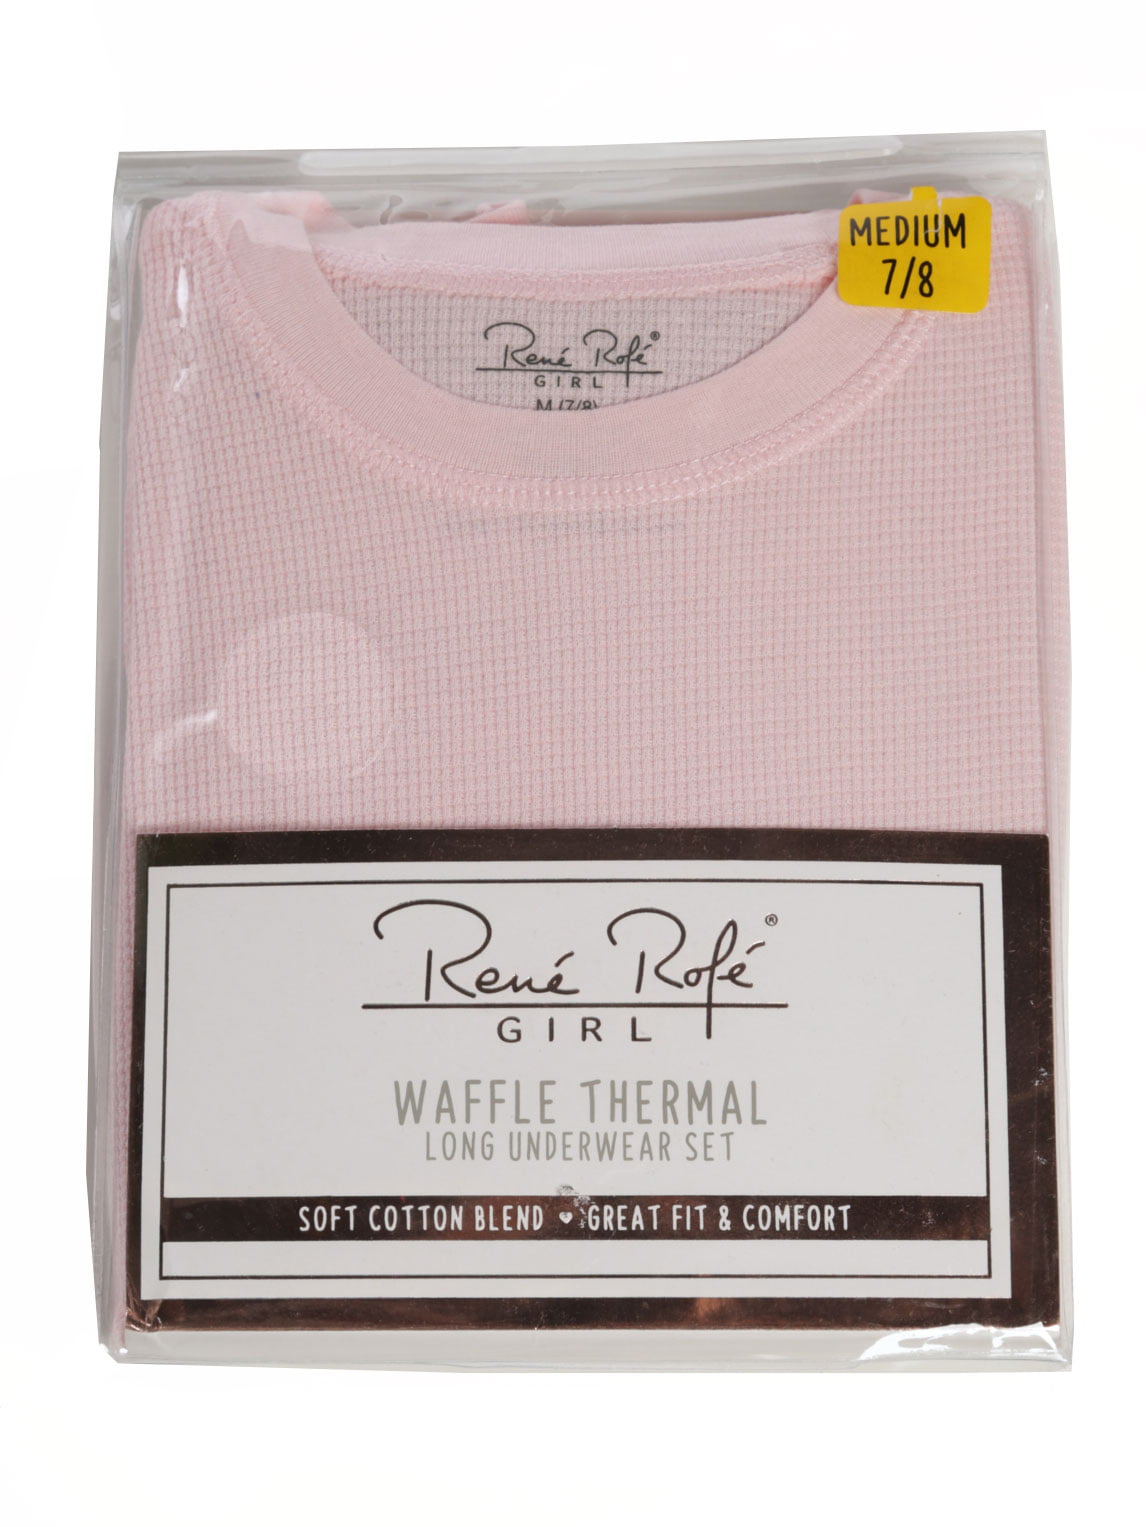 New Rene Rofe Girl/'s Waffle Thermal Long Underwear 2-Piece Set